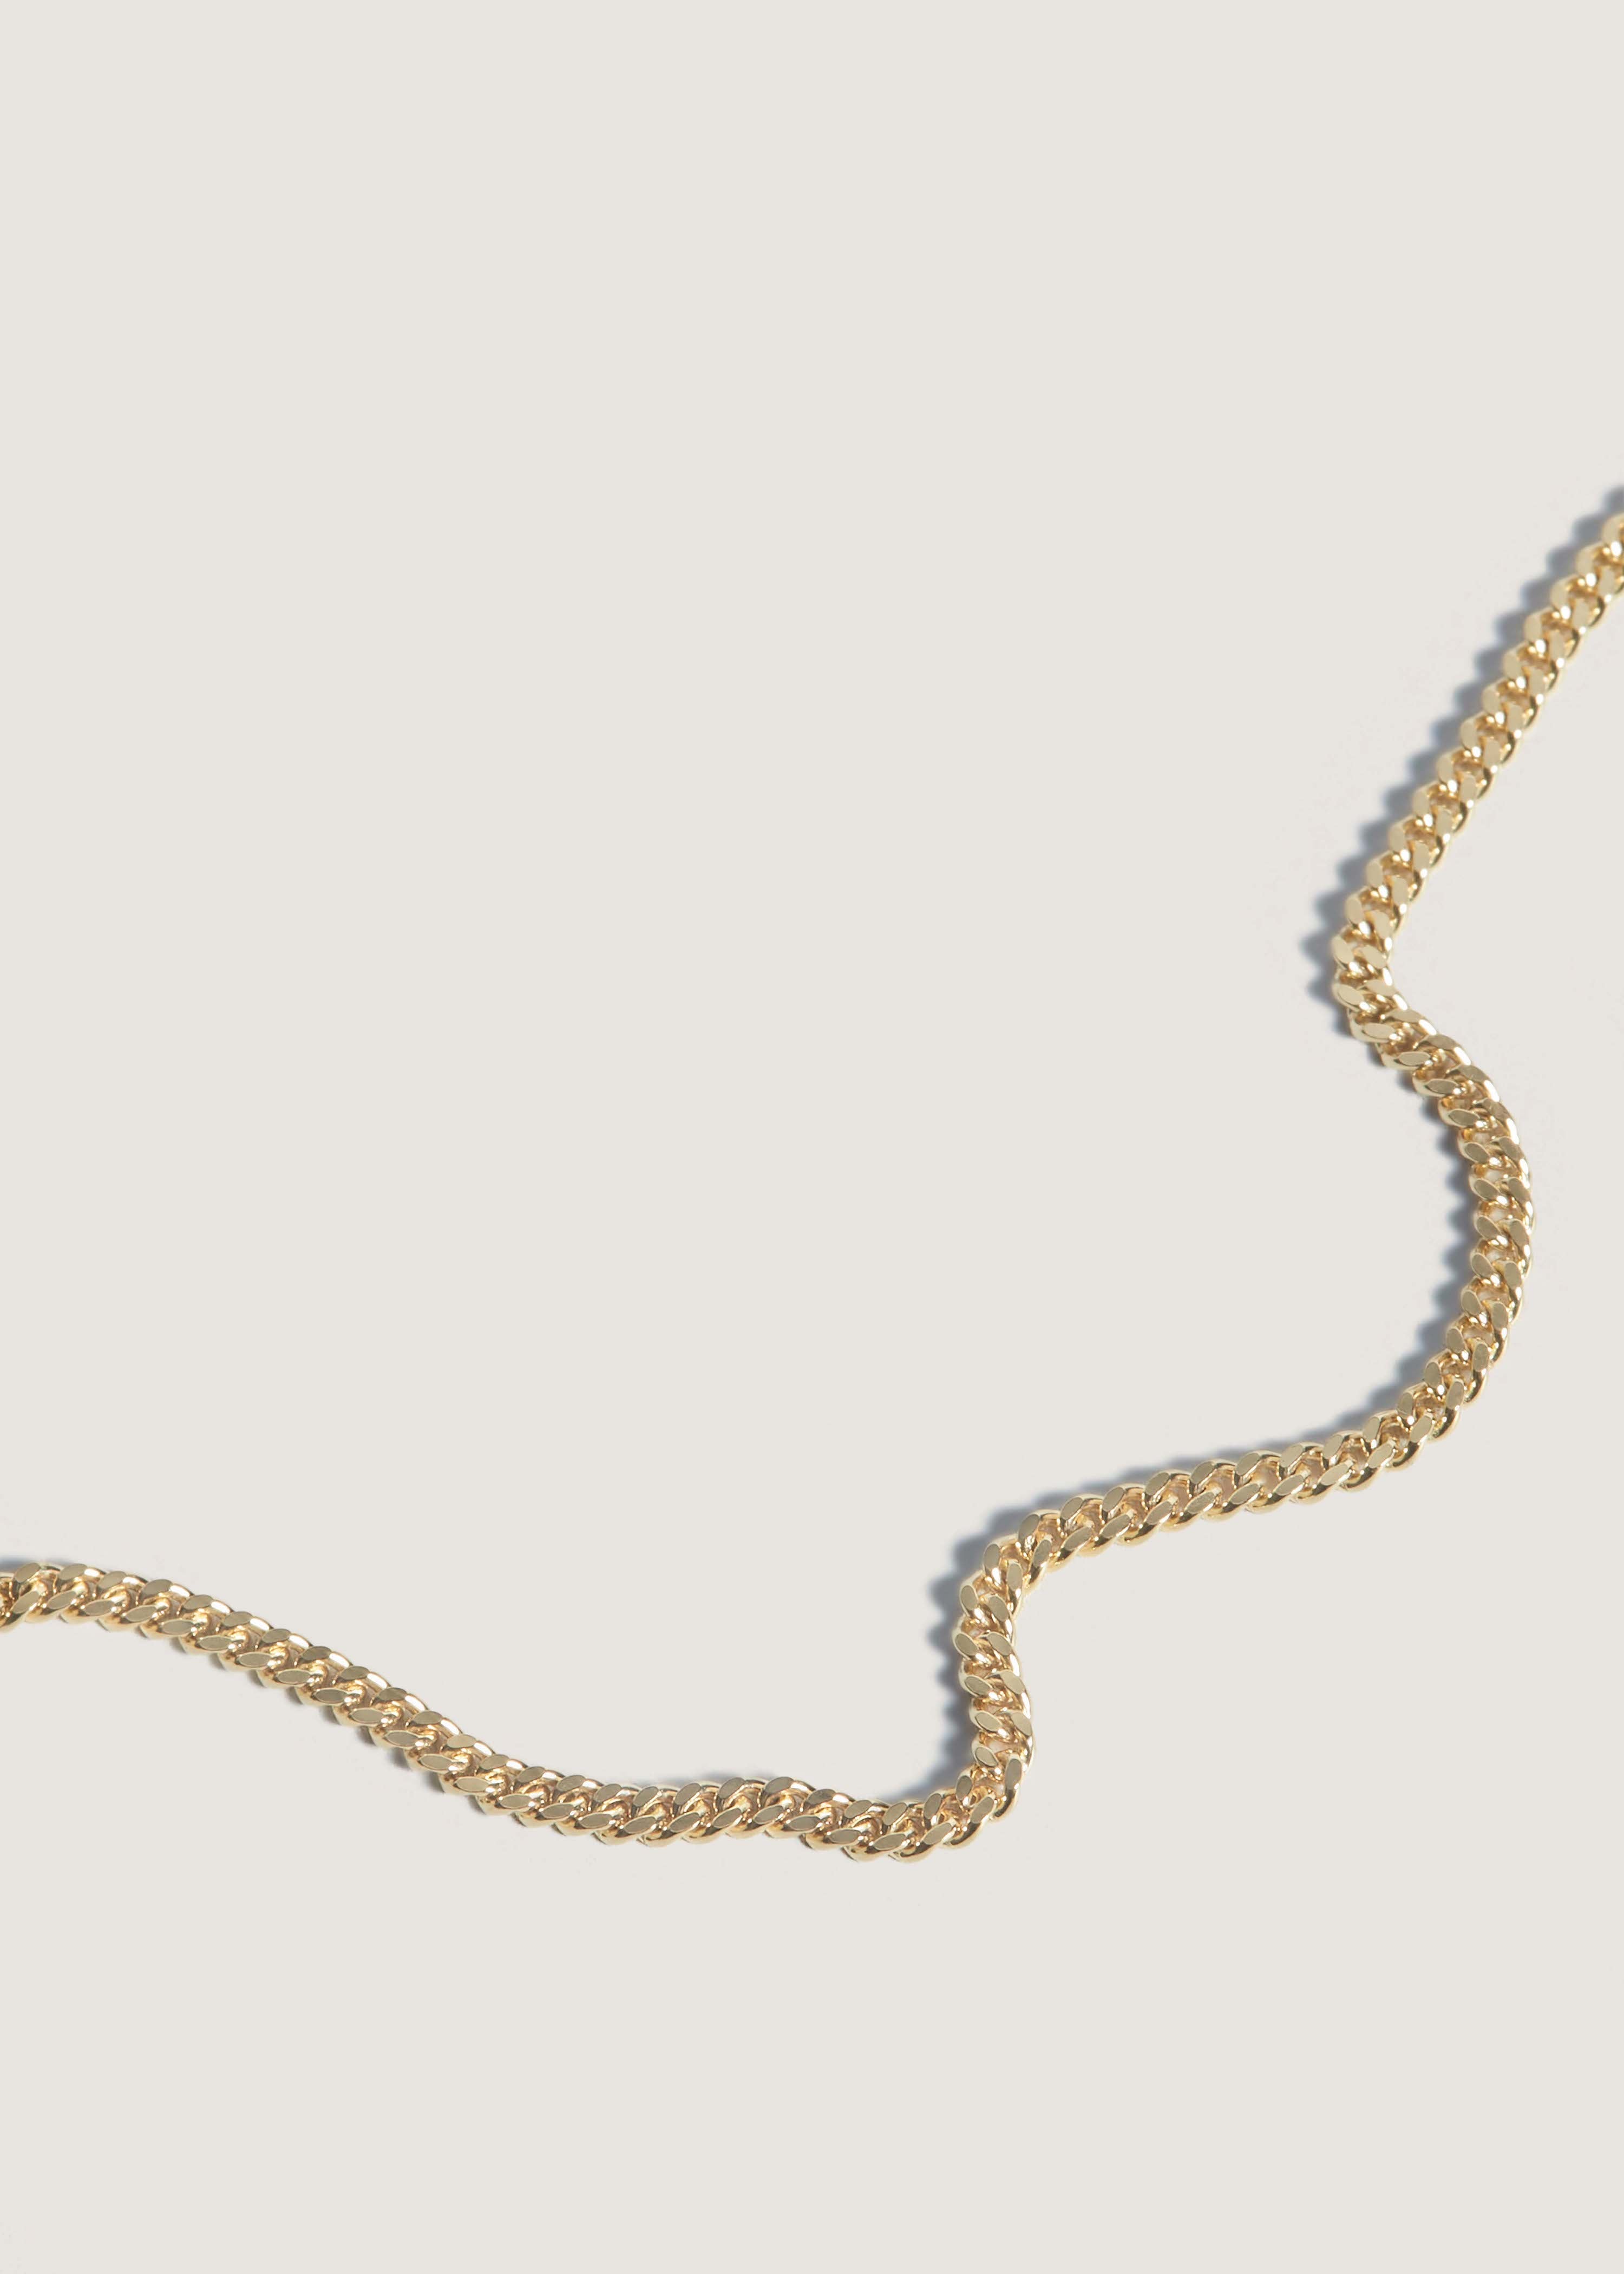 alt="Capri Curb Chain Necklace I"